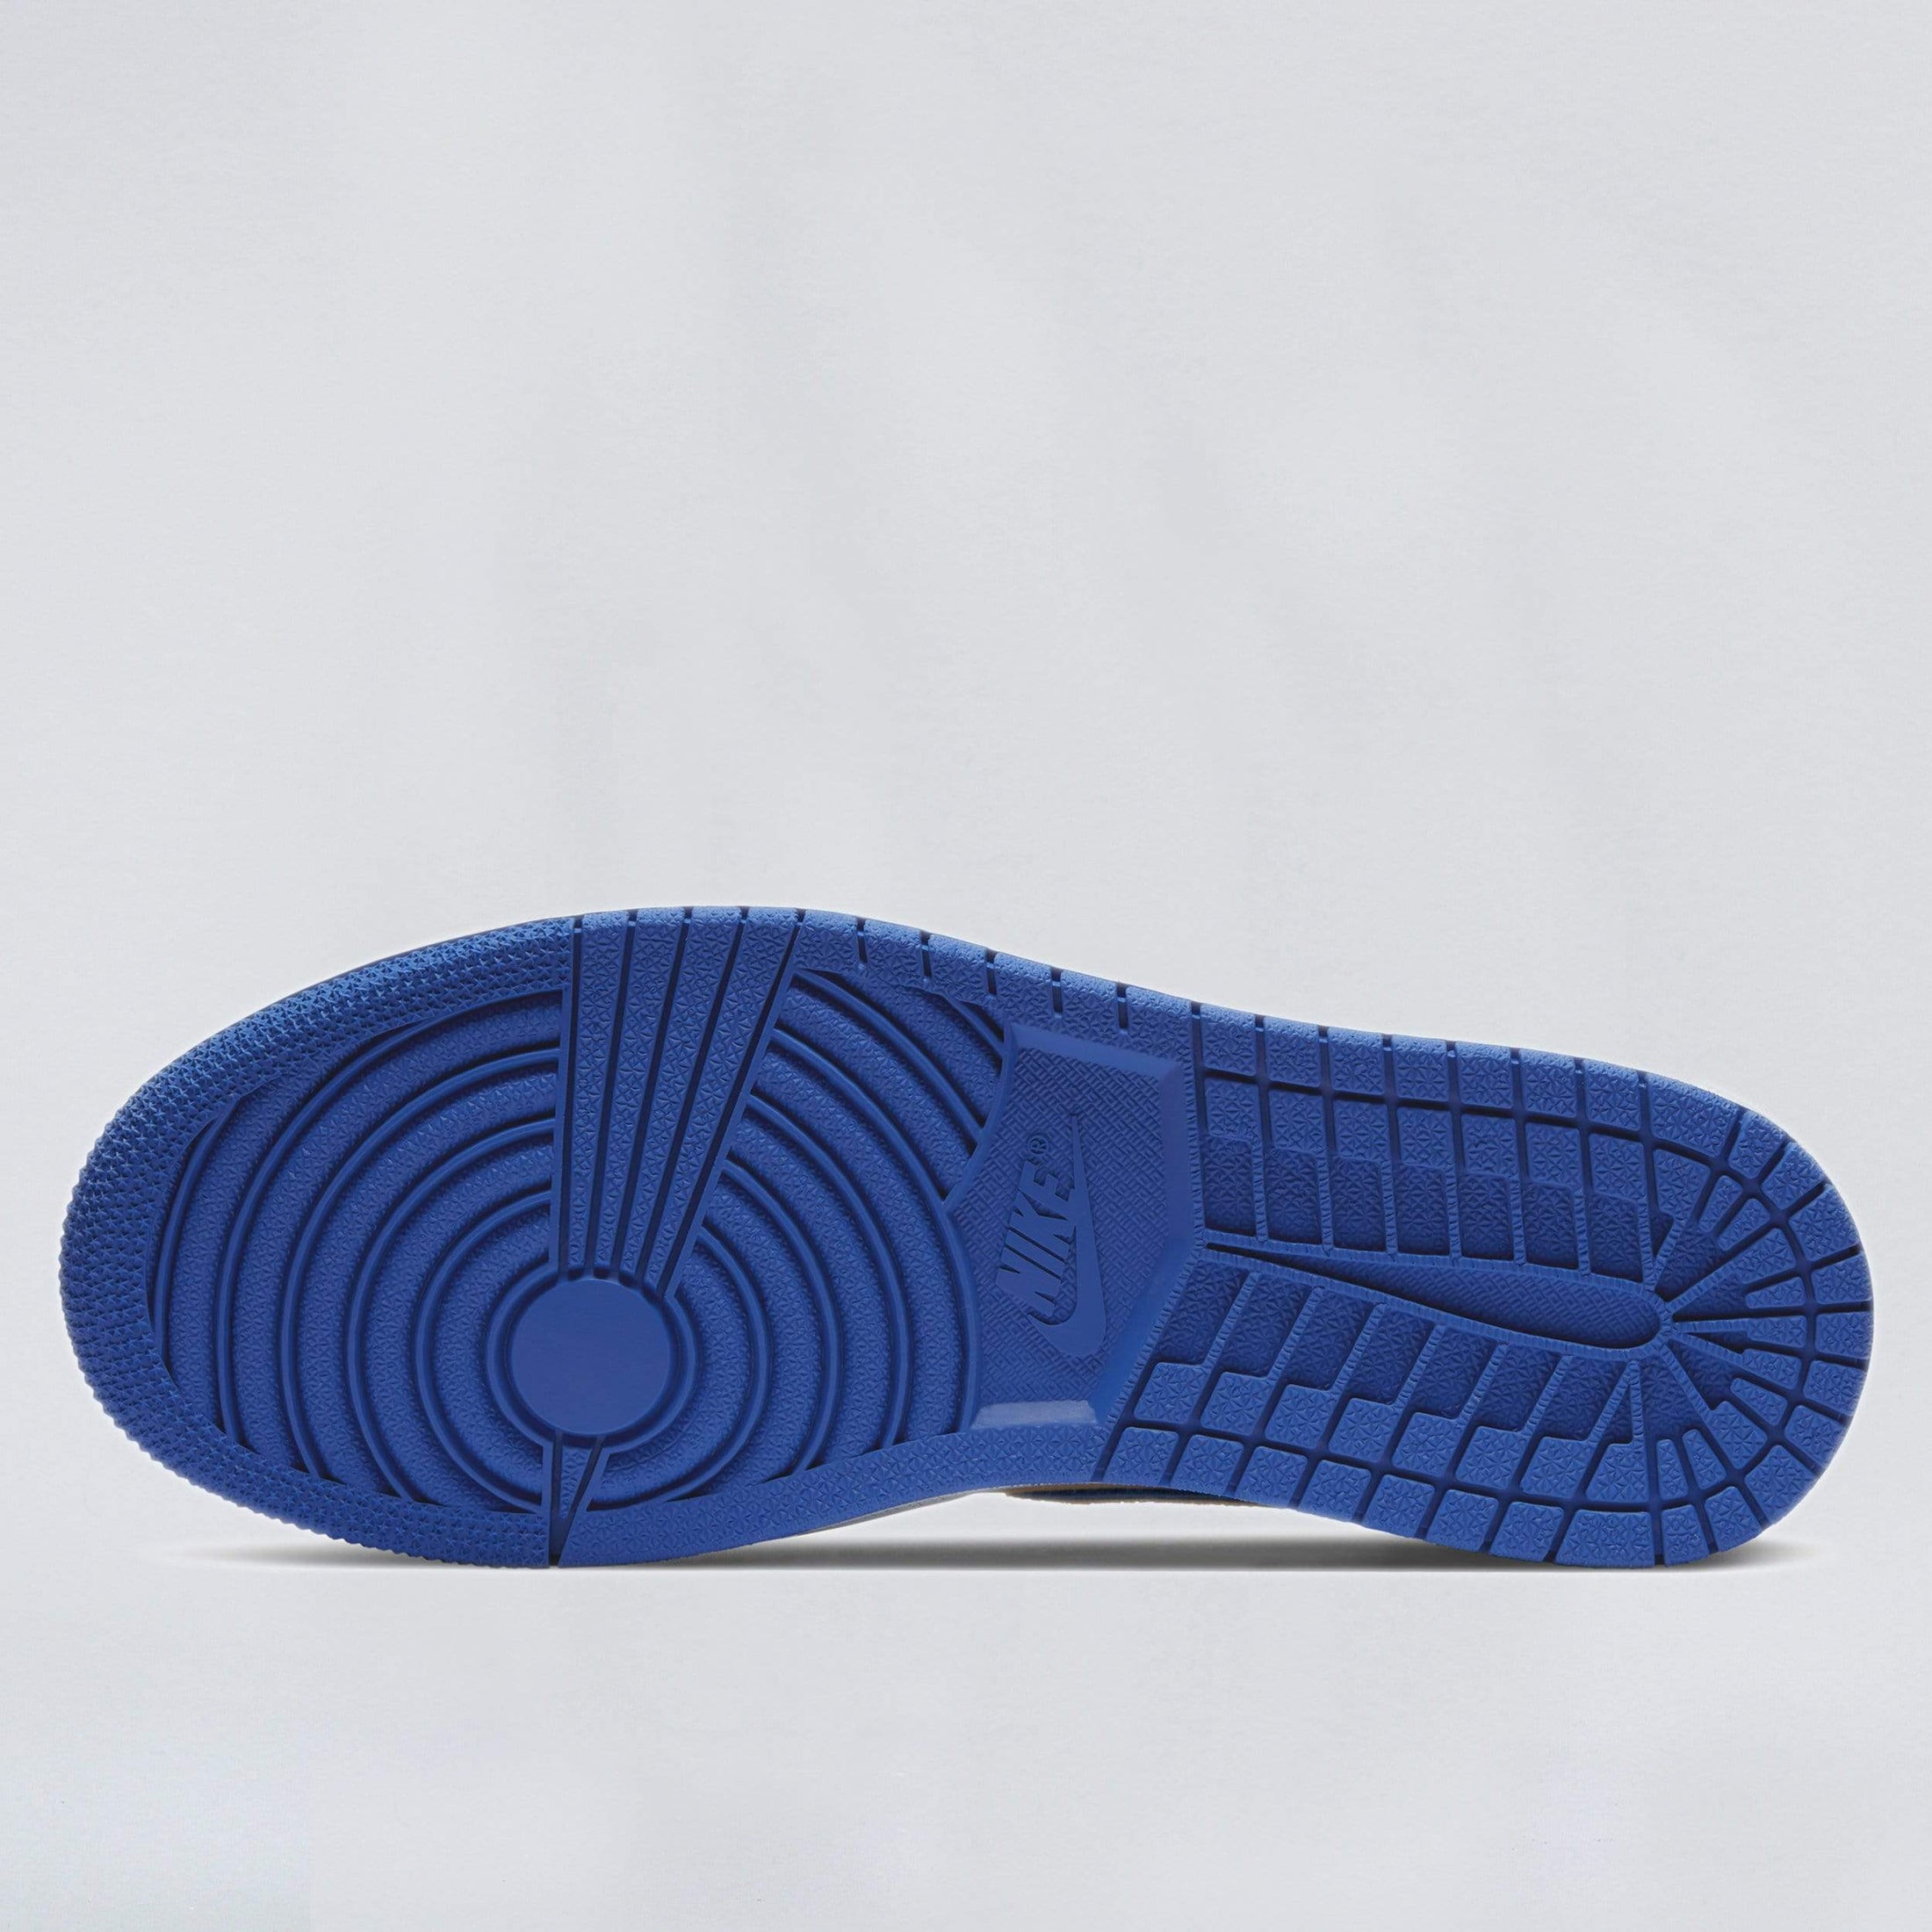 Nike SB Air Jordan 1 Low QS Shoes Desert Ore / Royal Blue - Dark Powder Blue